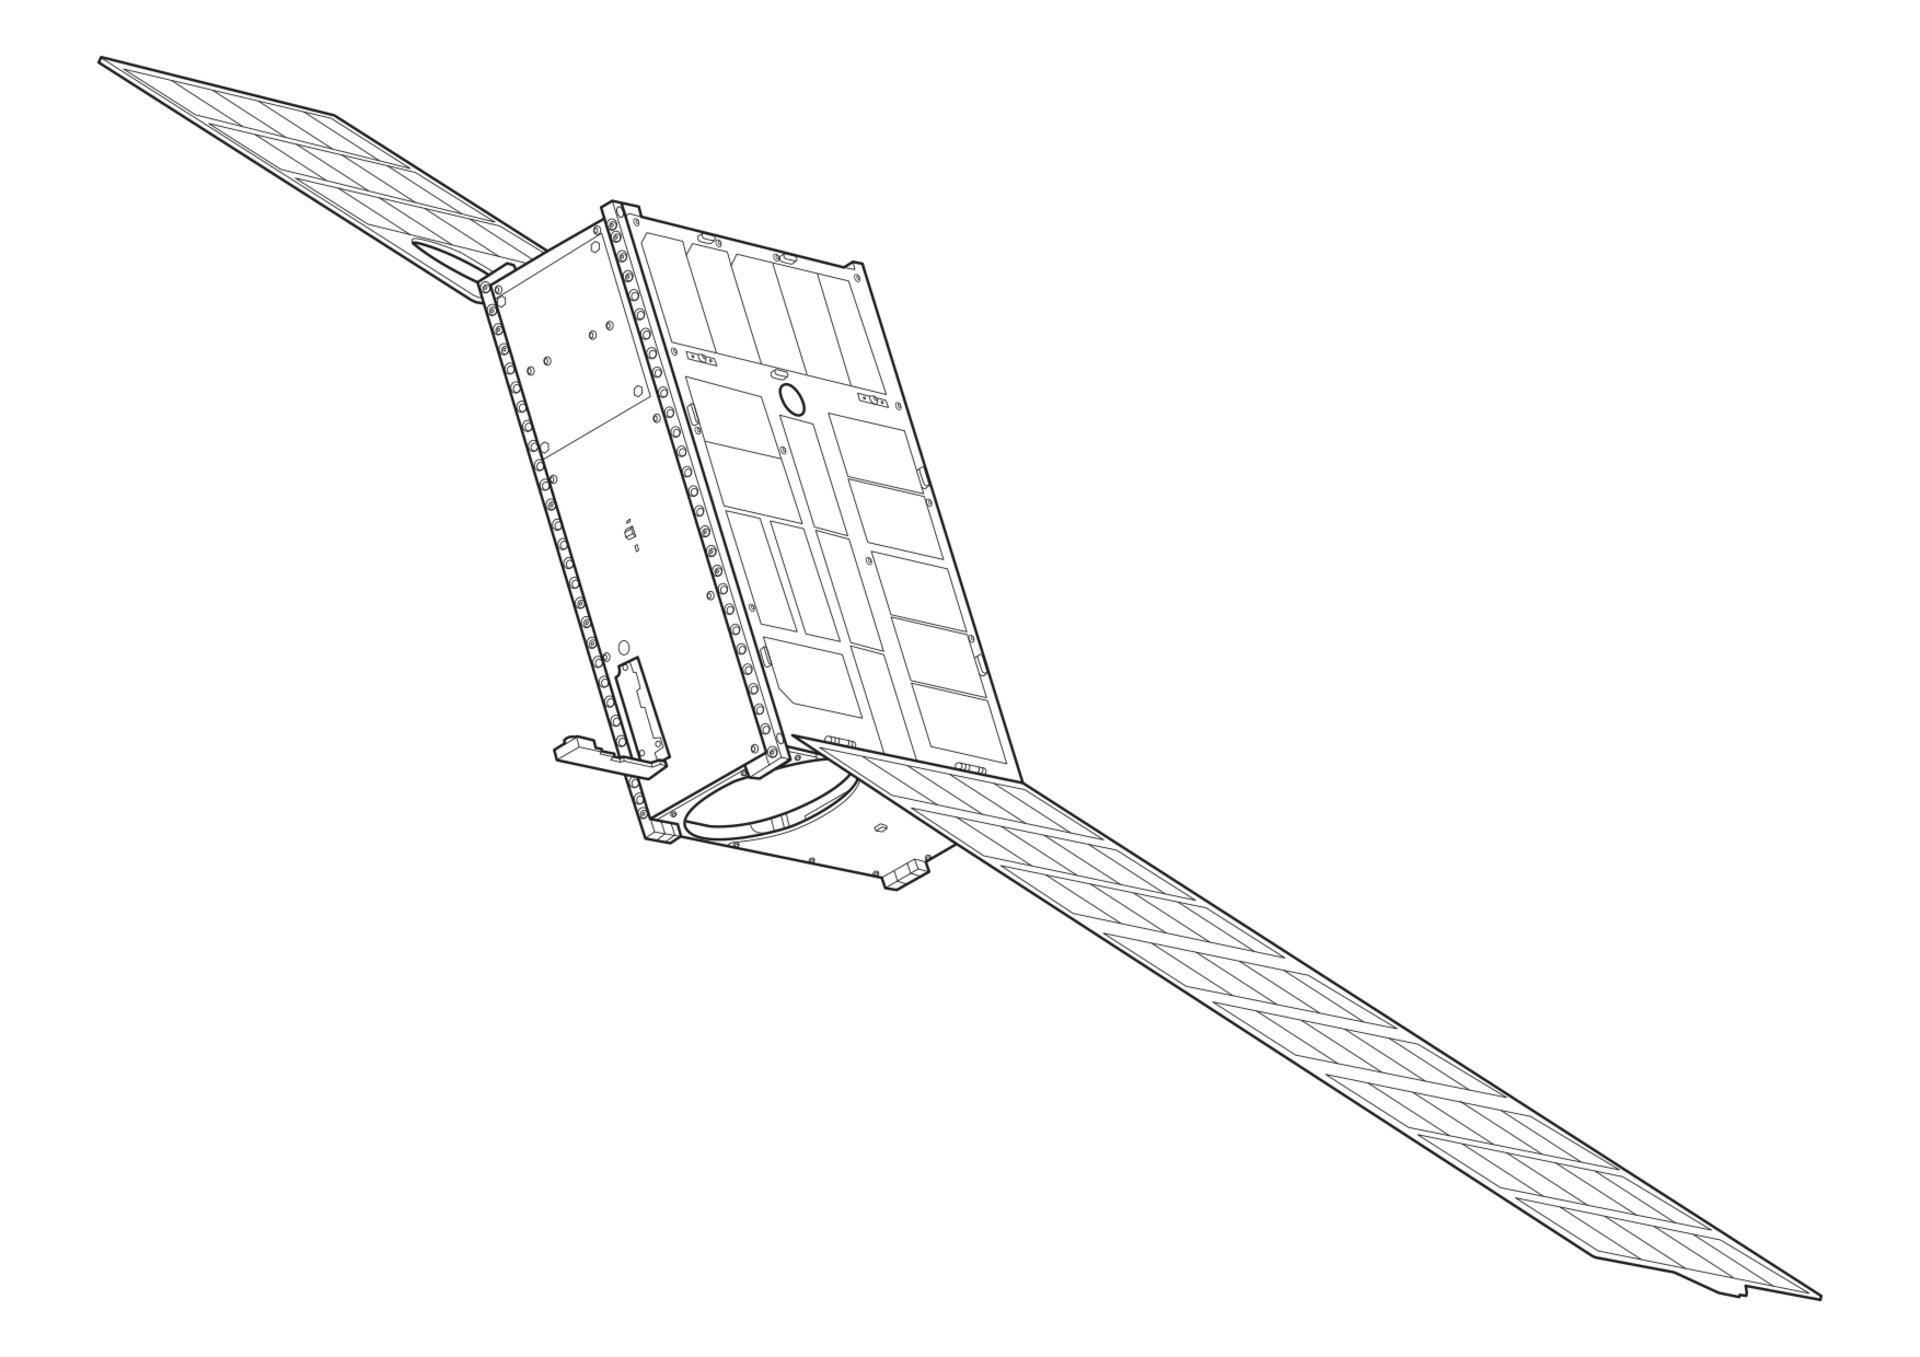 The Φsat-2 satellite